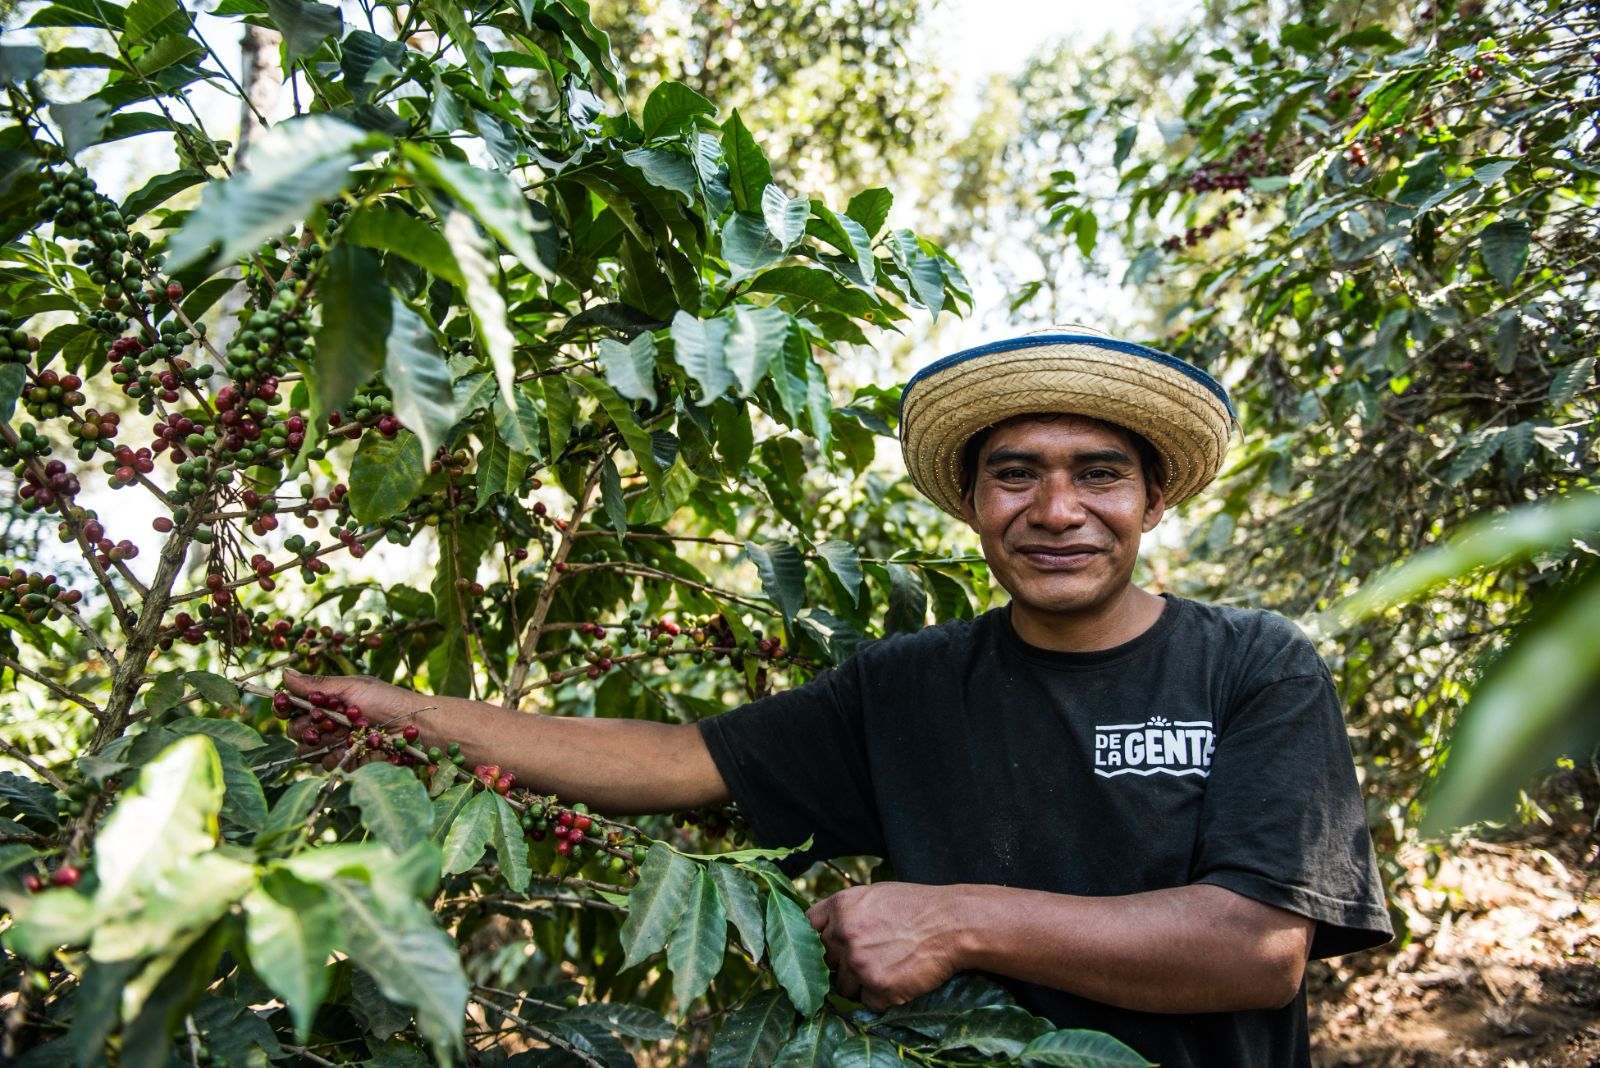 A fair trade coffee tour in Guatemala